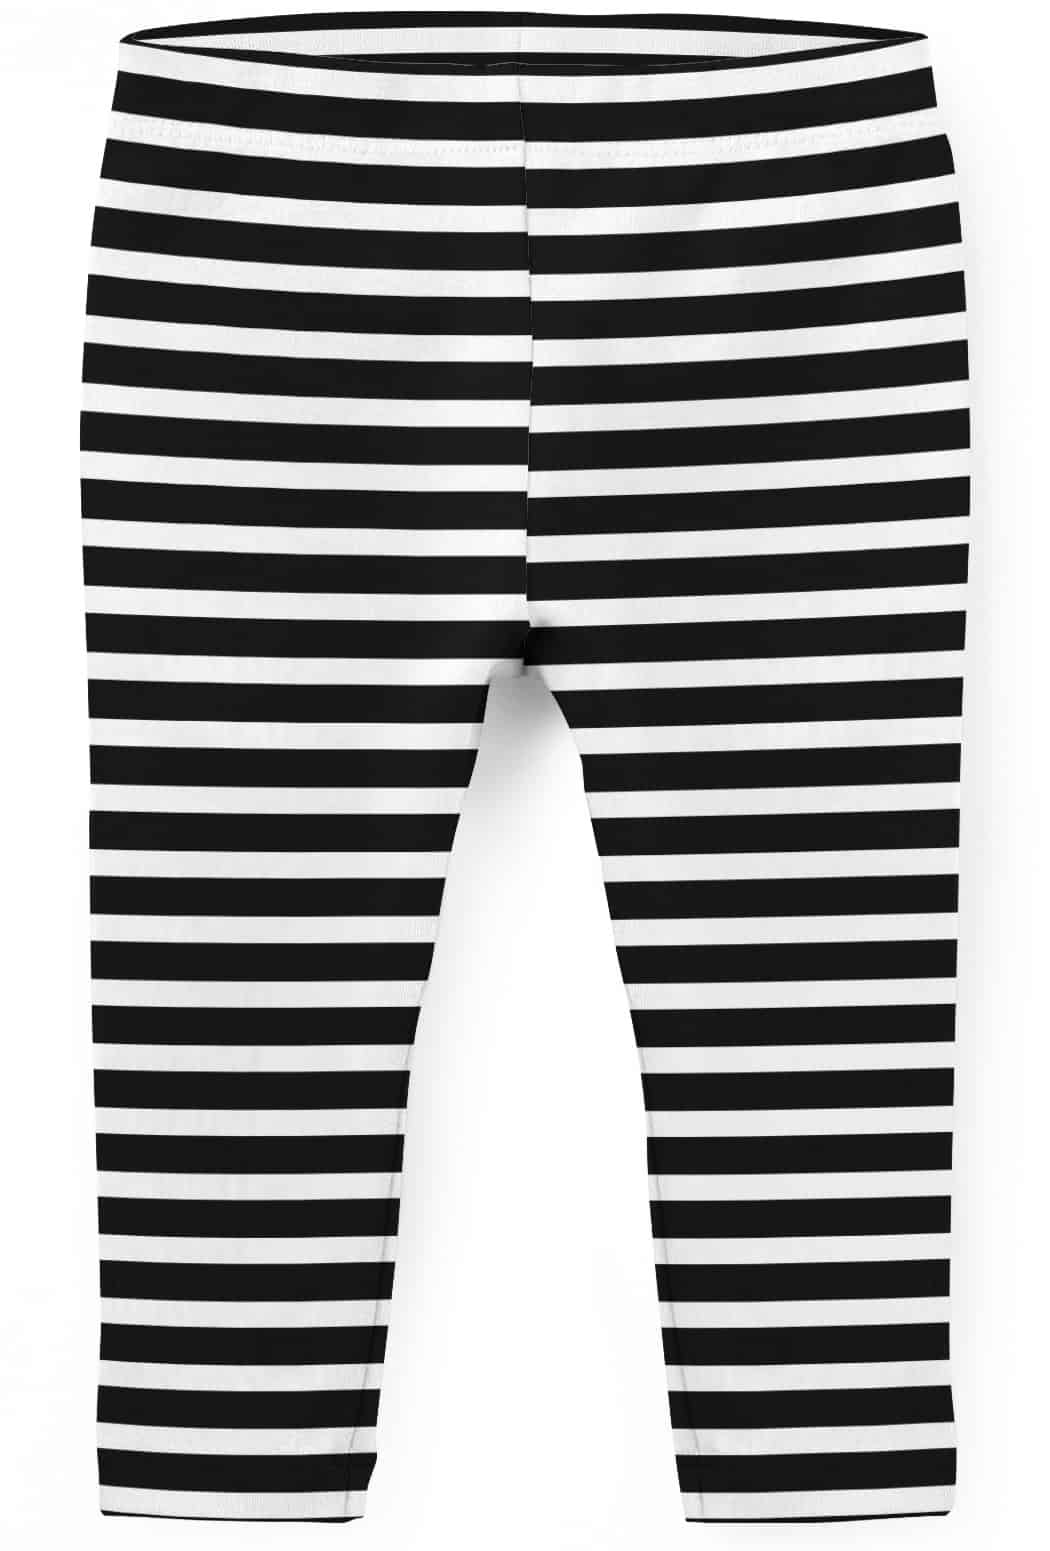 Black Gray Wide Striped Leggings, Stripe Leggings, Stretch Pants, Yoga Pants,  Stripes Leggings - Etsy